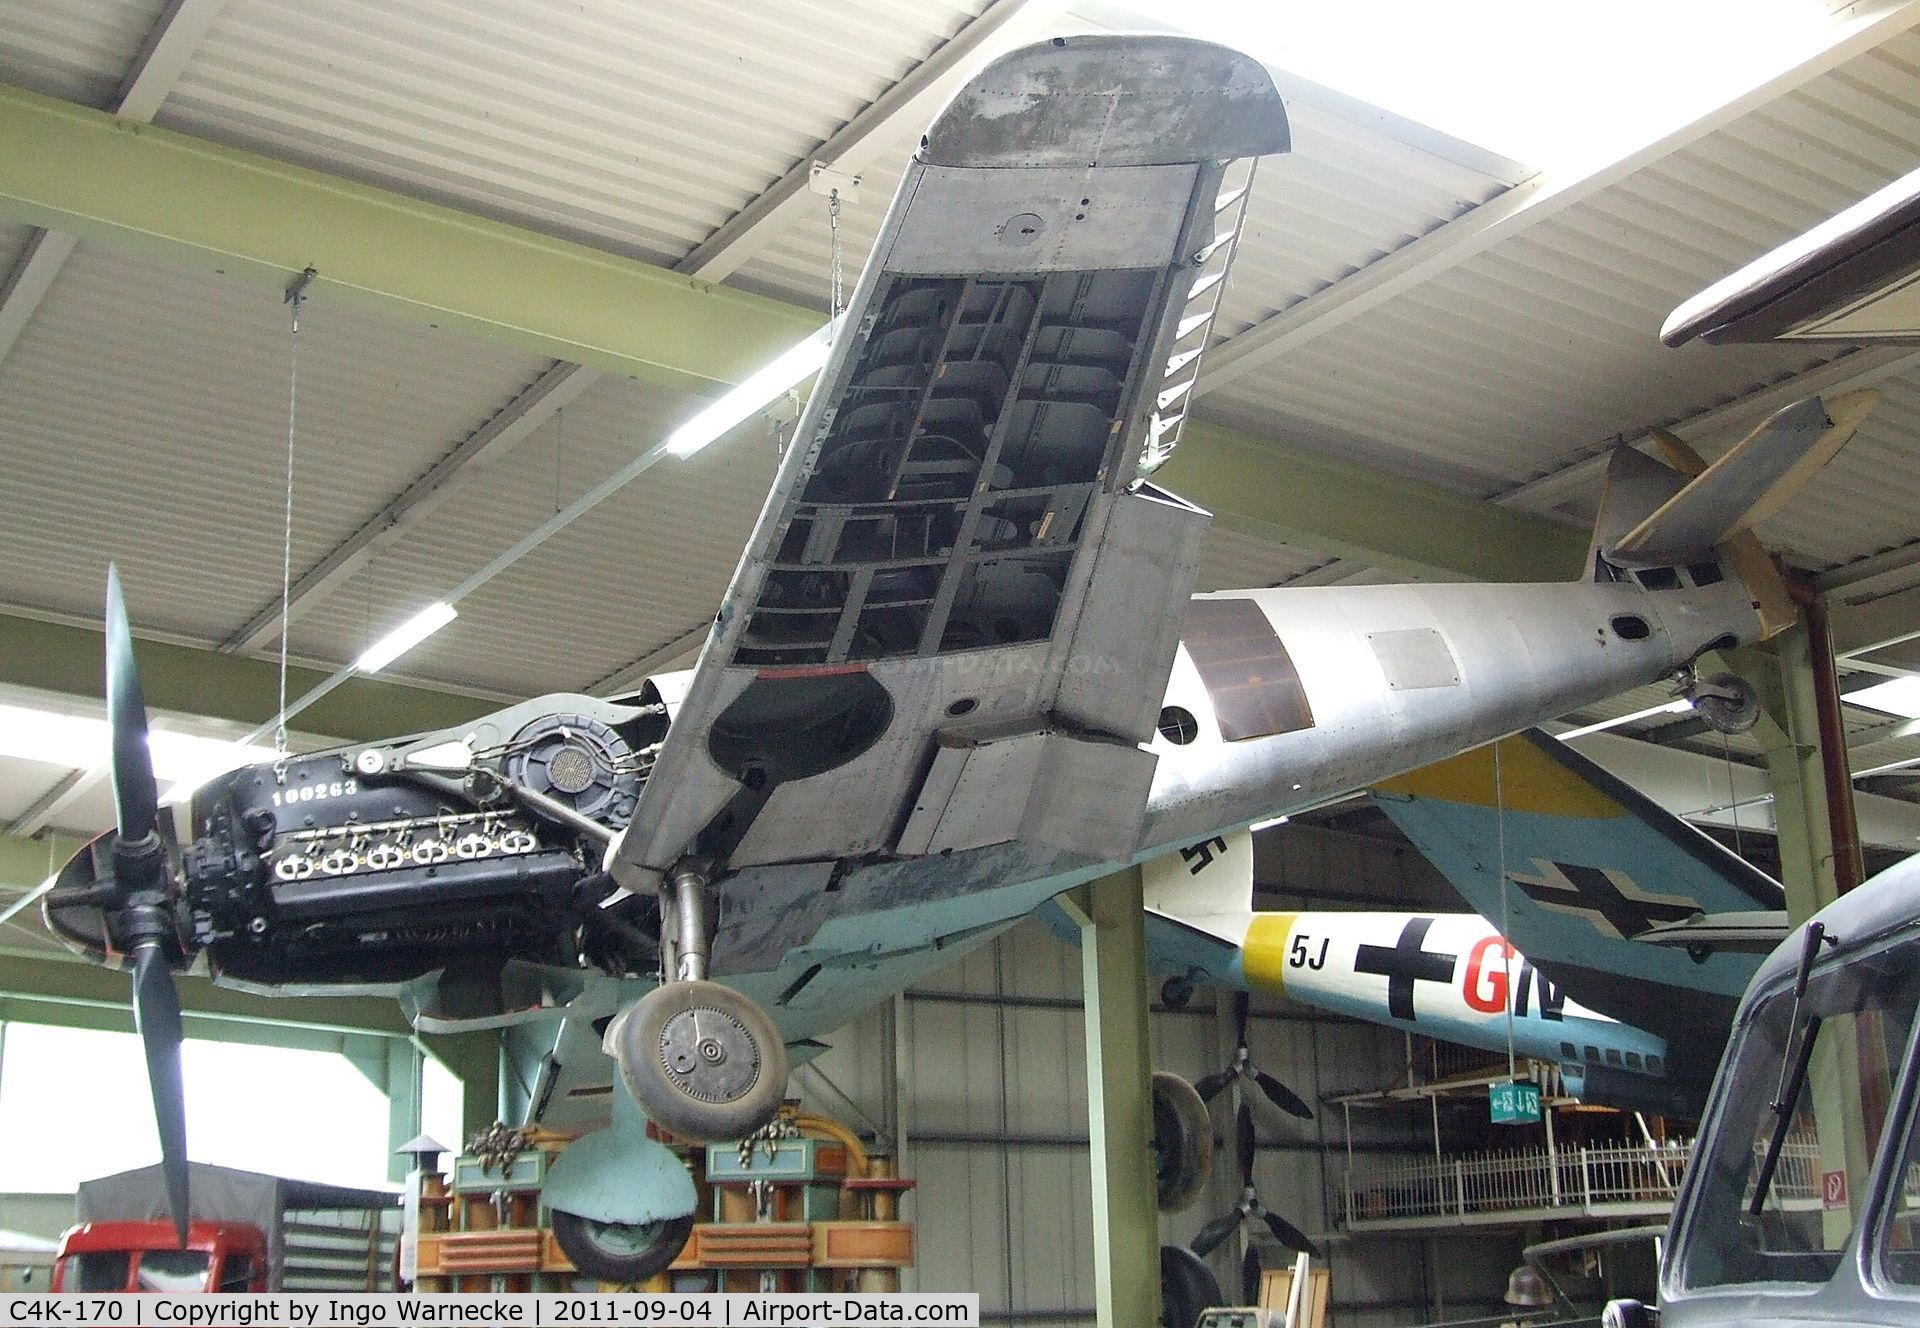 C4K-170, 1966 Hispano HA-1112-M1L Buchon C/N 228, Hispano HA-1112-M1L Buchon (re-converted with DB engine to represent a Messerschmitt Bf 109) at the Auto & Technik Museum, Sinsheim